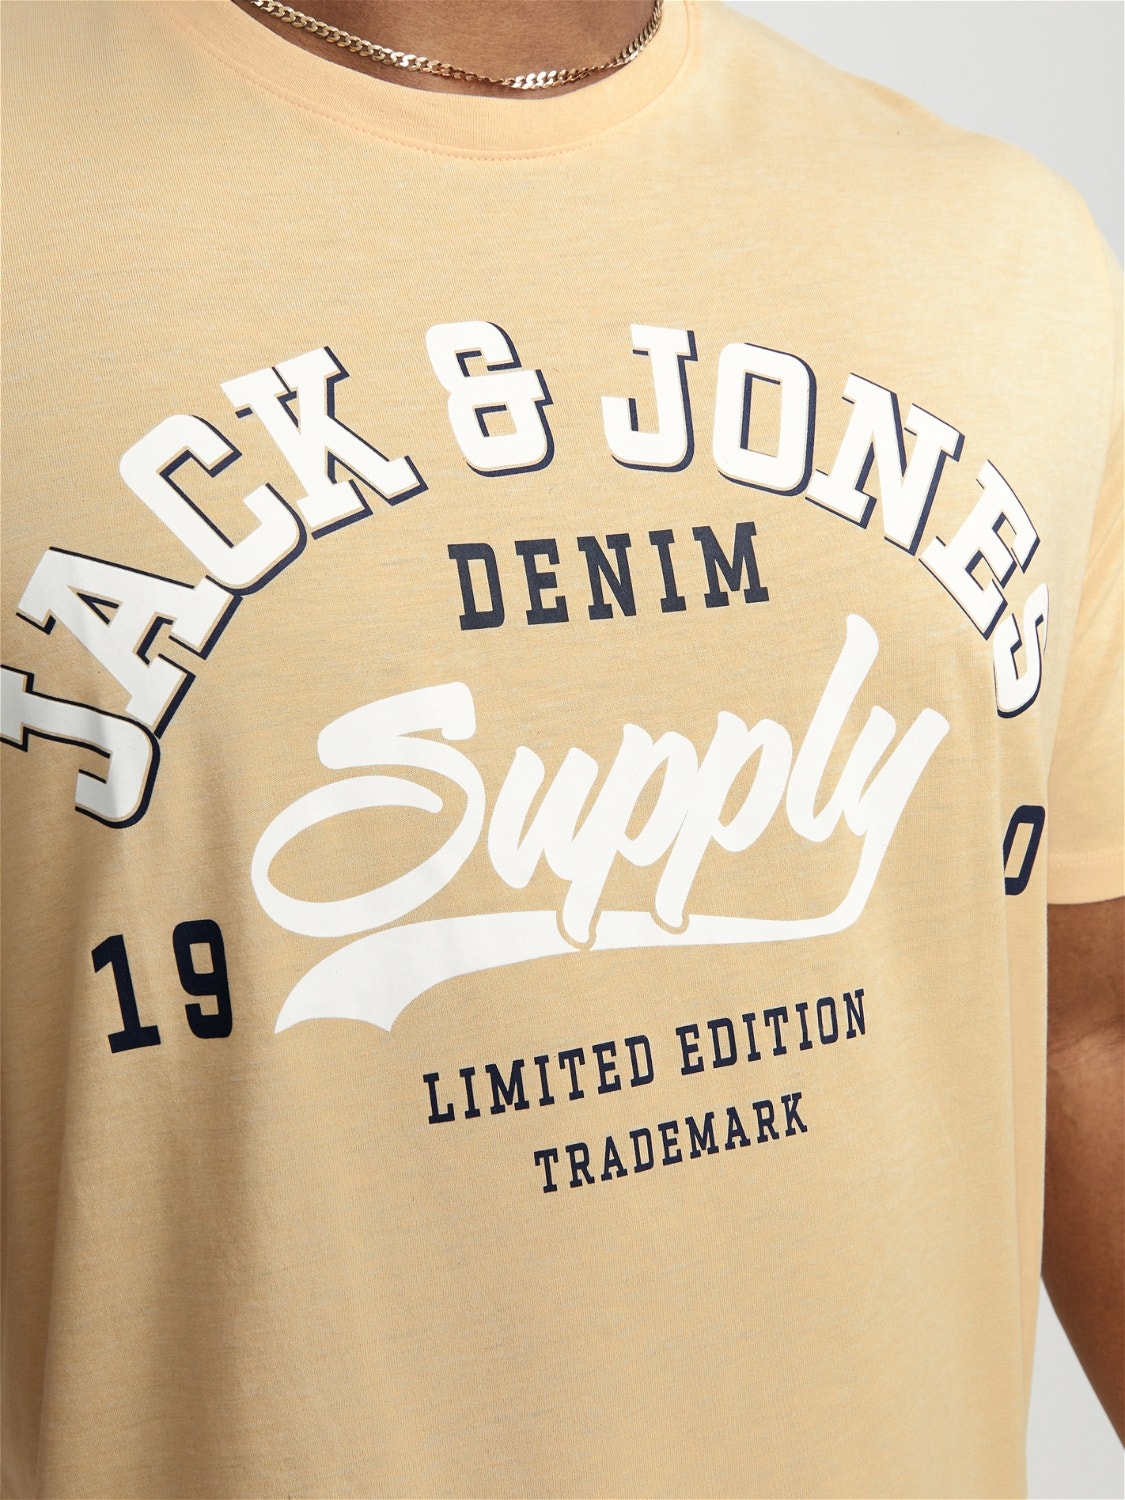 Jack & Jones Plus Size T-shirt Logo -Apricot Ice  - 12243611